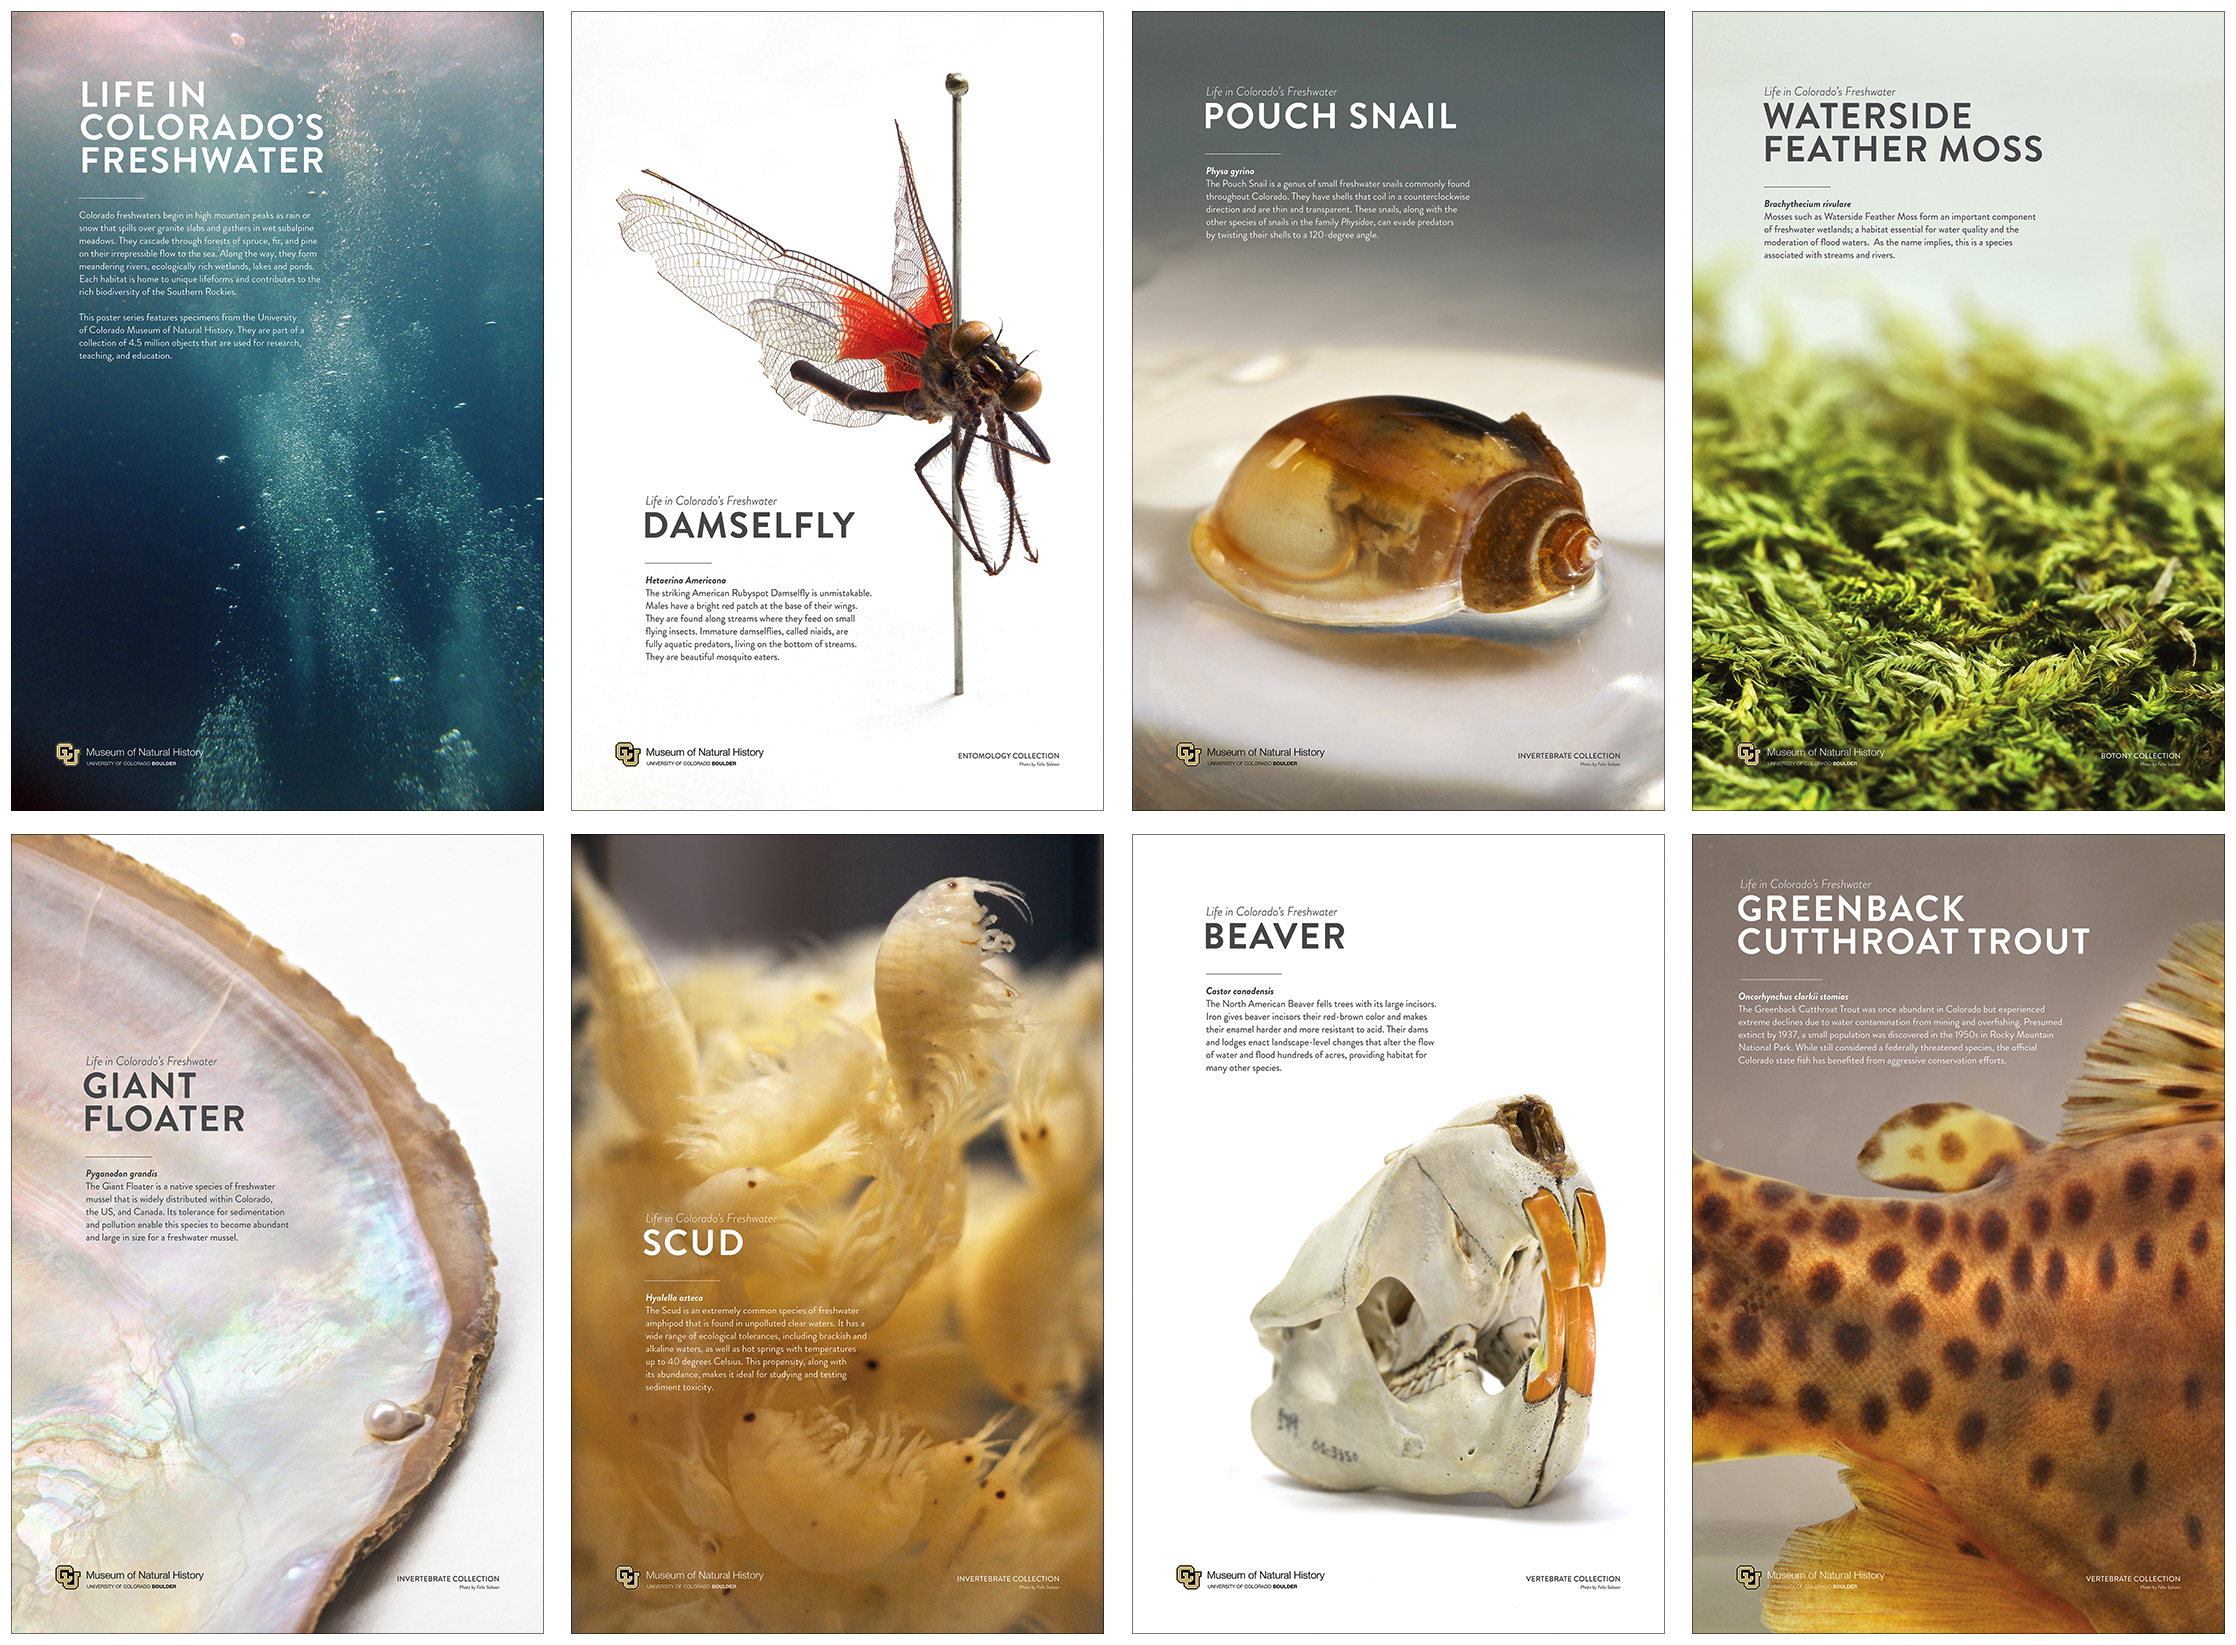   Exhibit Posters  University of Colorado Natural History Museum (Photos by Felix Salazar) Adobe InDesign 